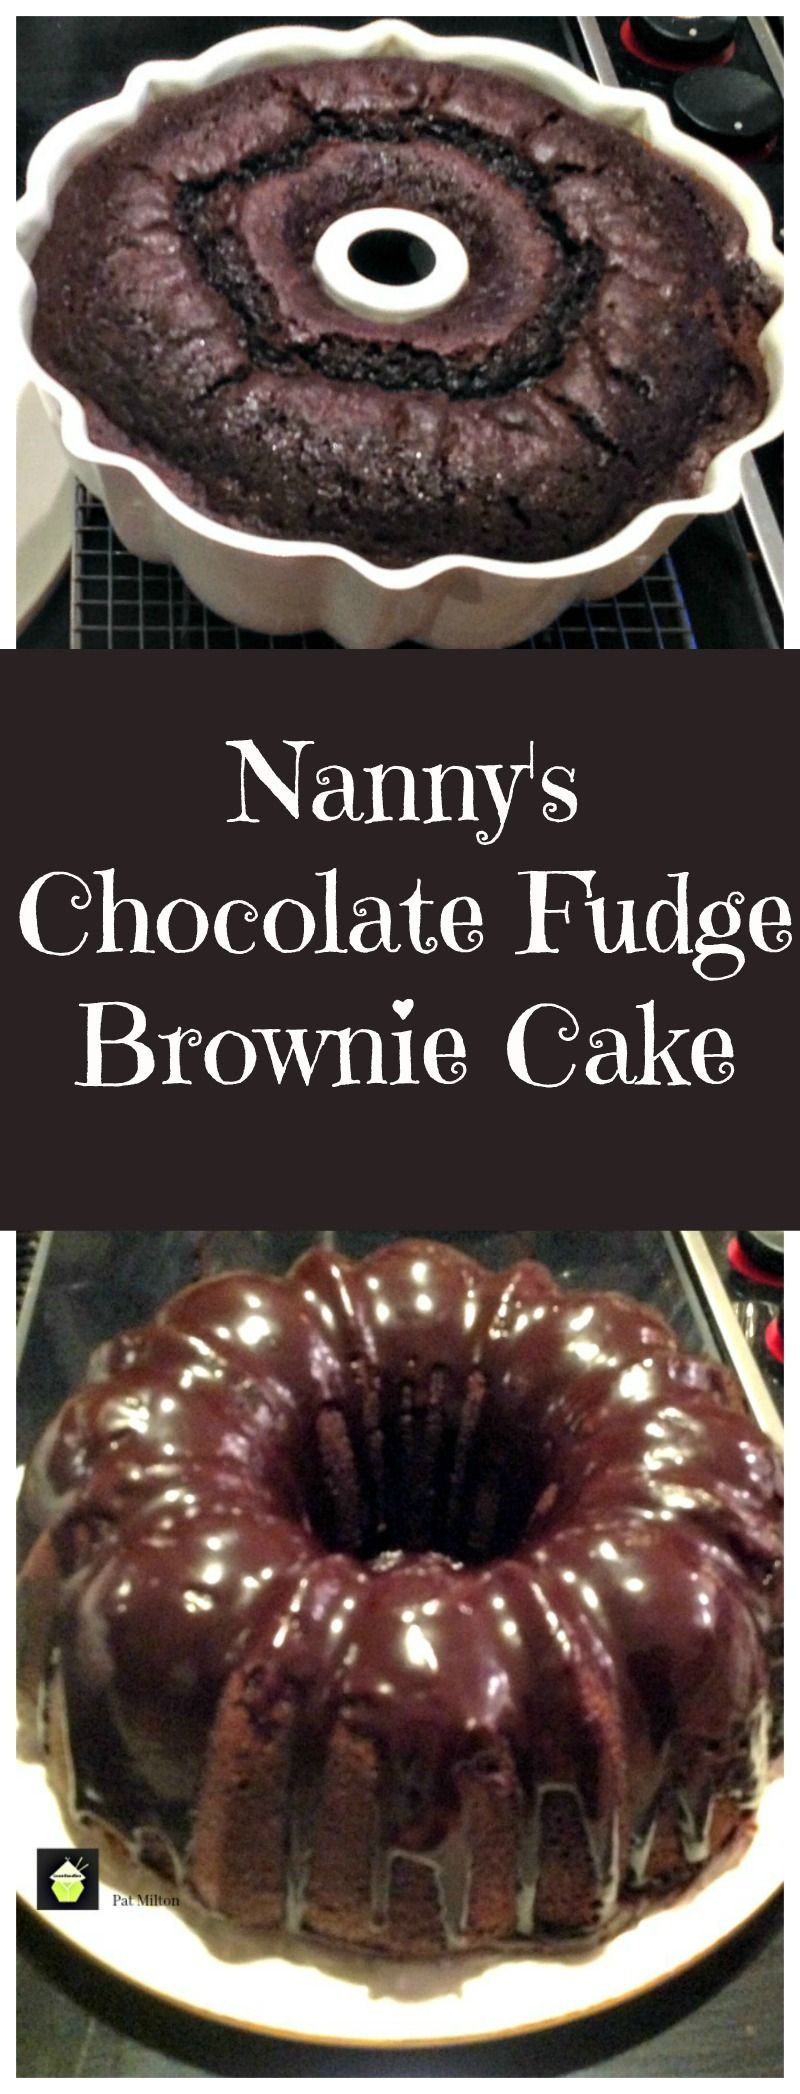 Nannys Chocolate Fudge Brownie Cake is a keeper recipe! Easy to make and…